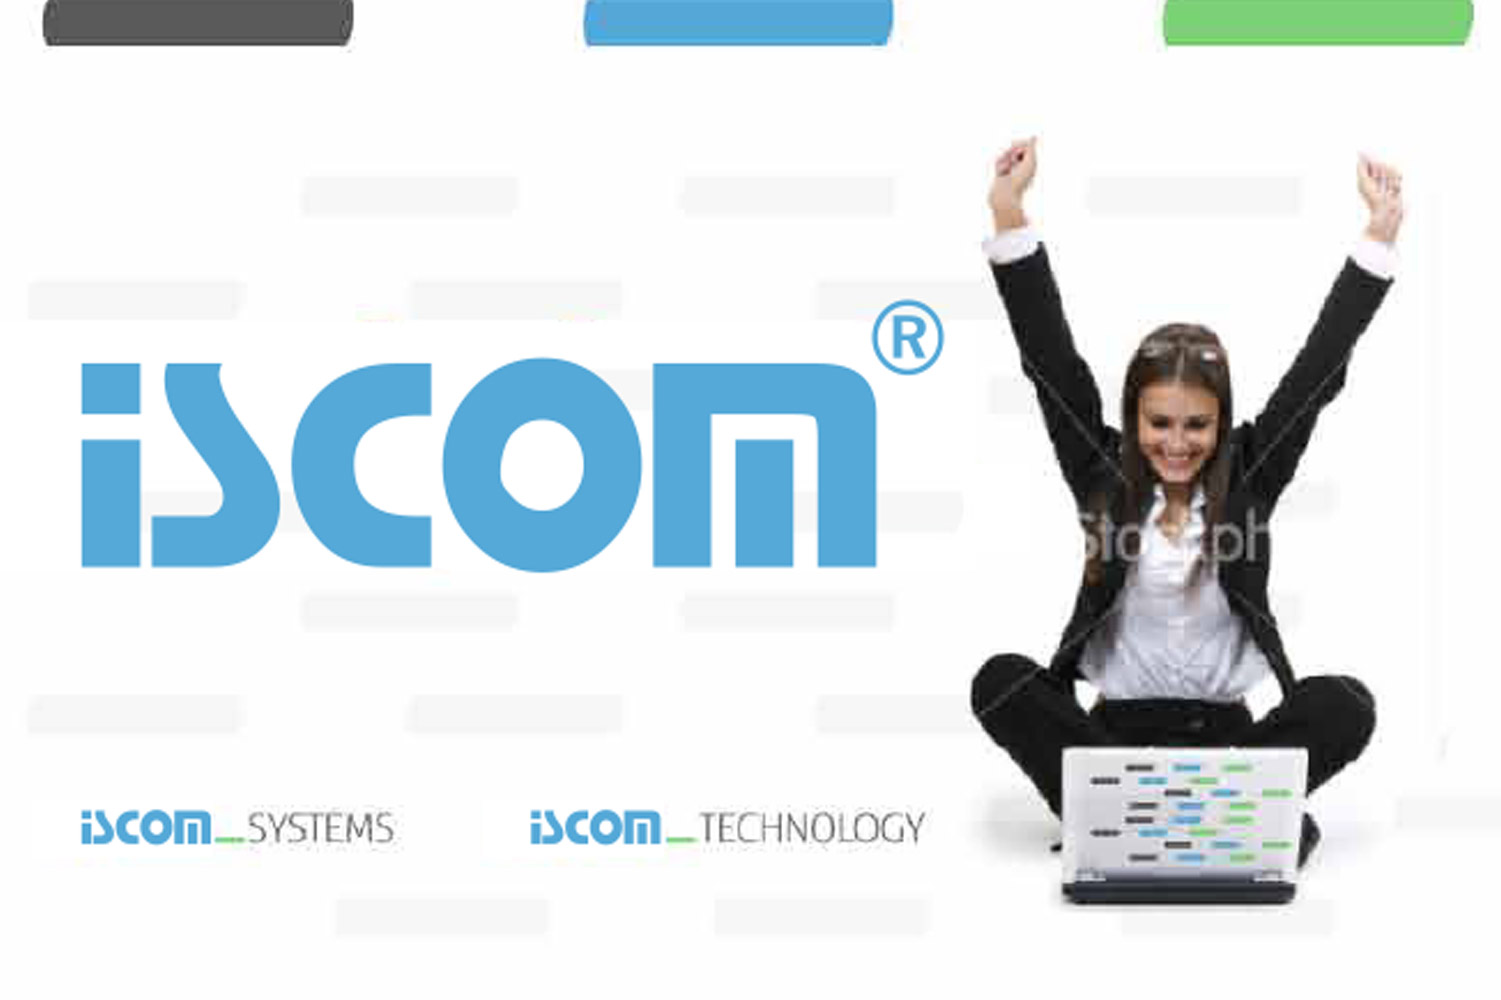 Iscom, Corporate Identity image